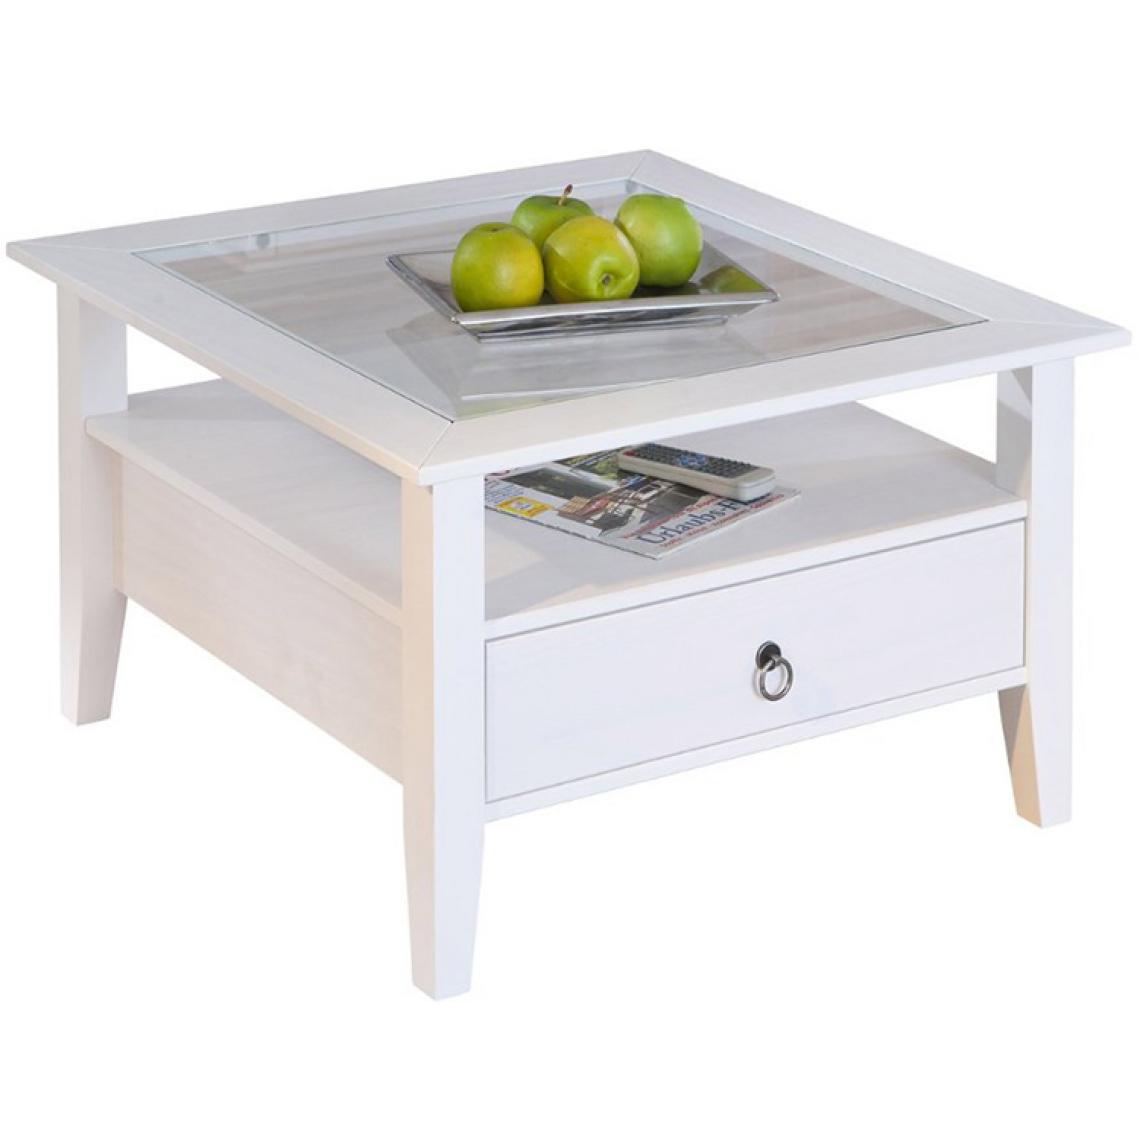 Pegane - Table Basse Provence 1 Blanc, Dim : 75 x 75 x 45 cm - Tables basses